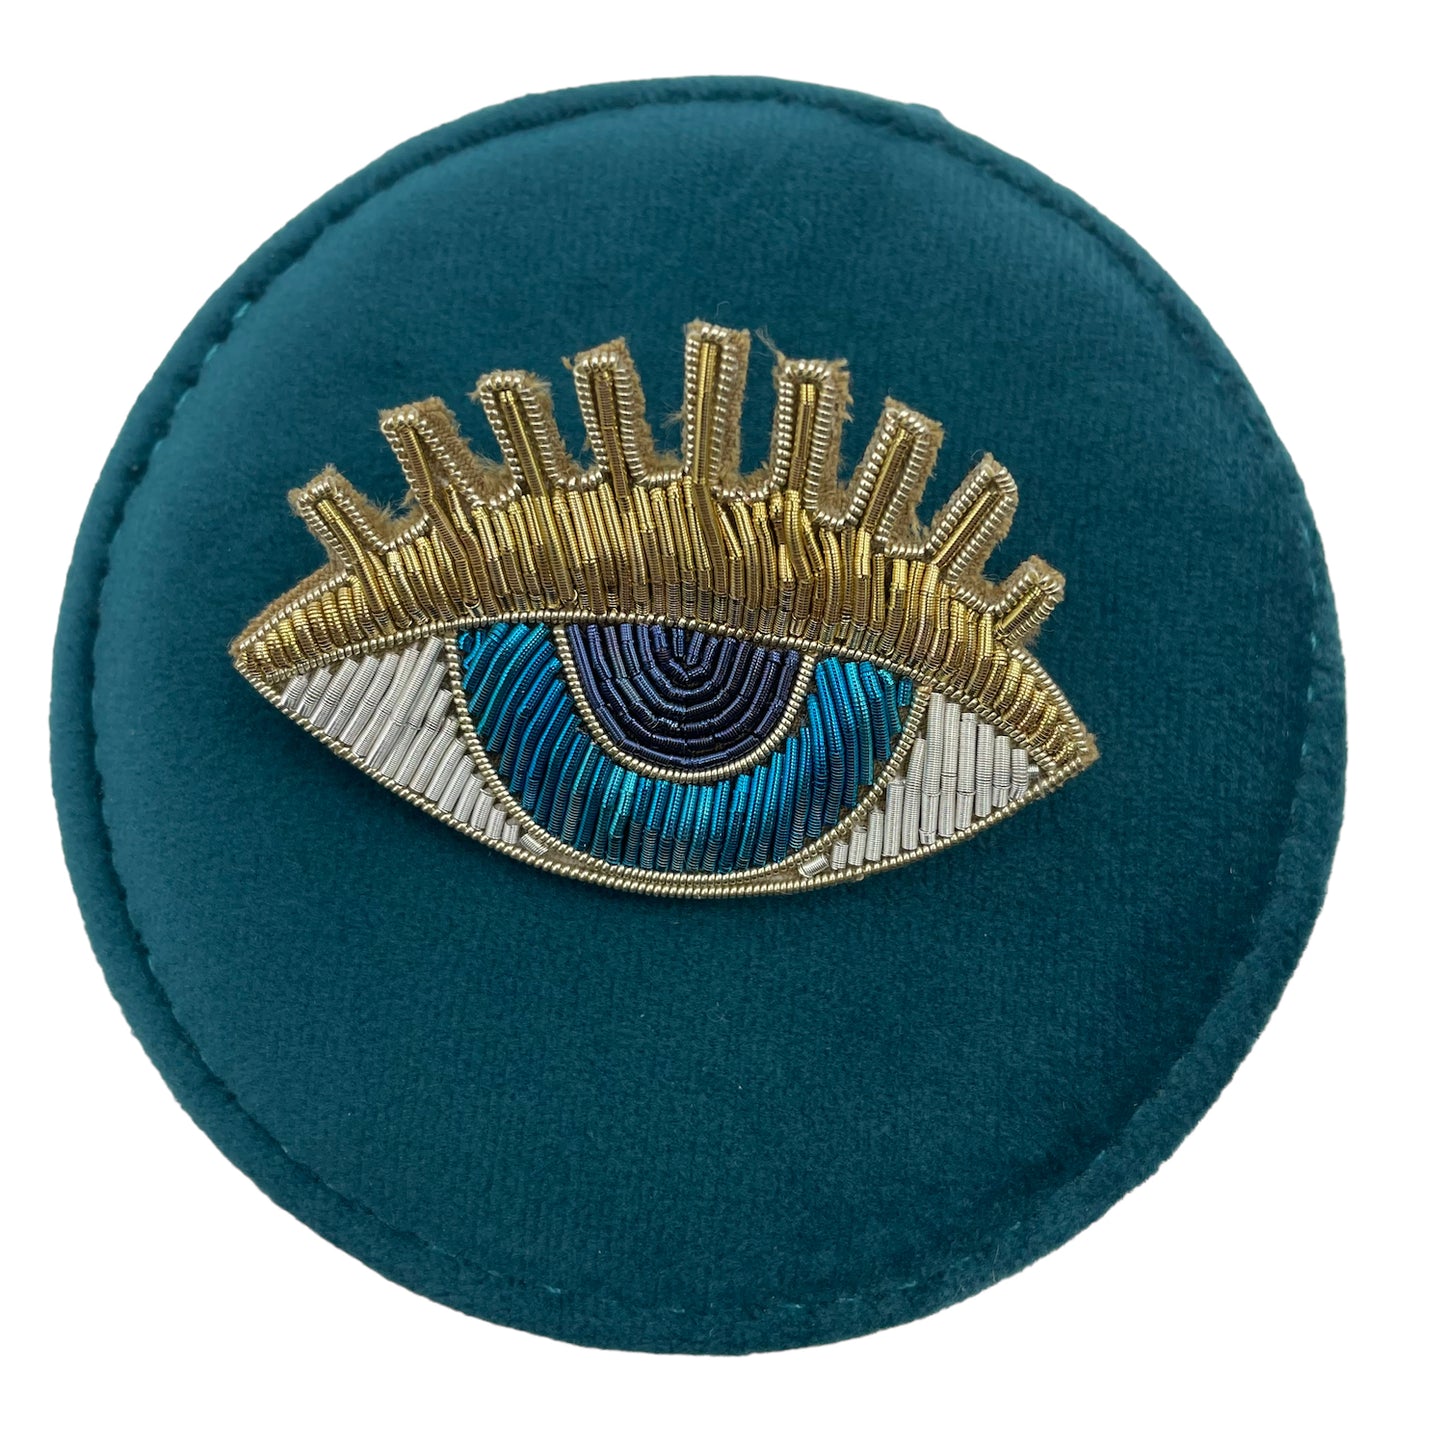 Jewellery travel pot teal - recycled velvet - blue eyes gold lashes